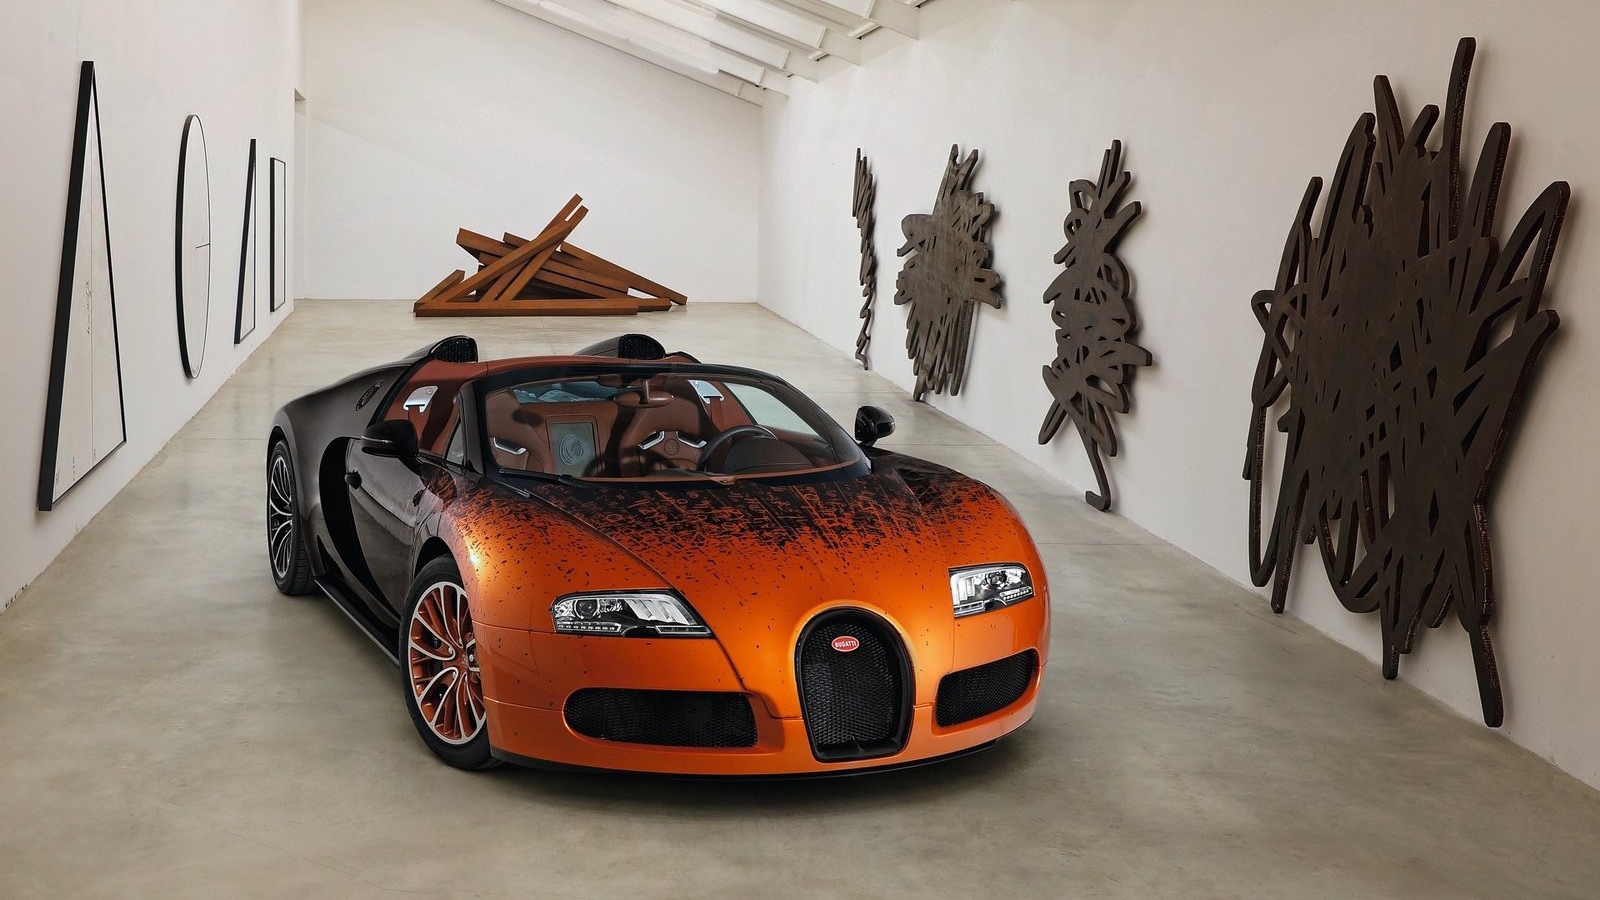 Convertible Bugatti Veyron in the exhibition hall